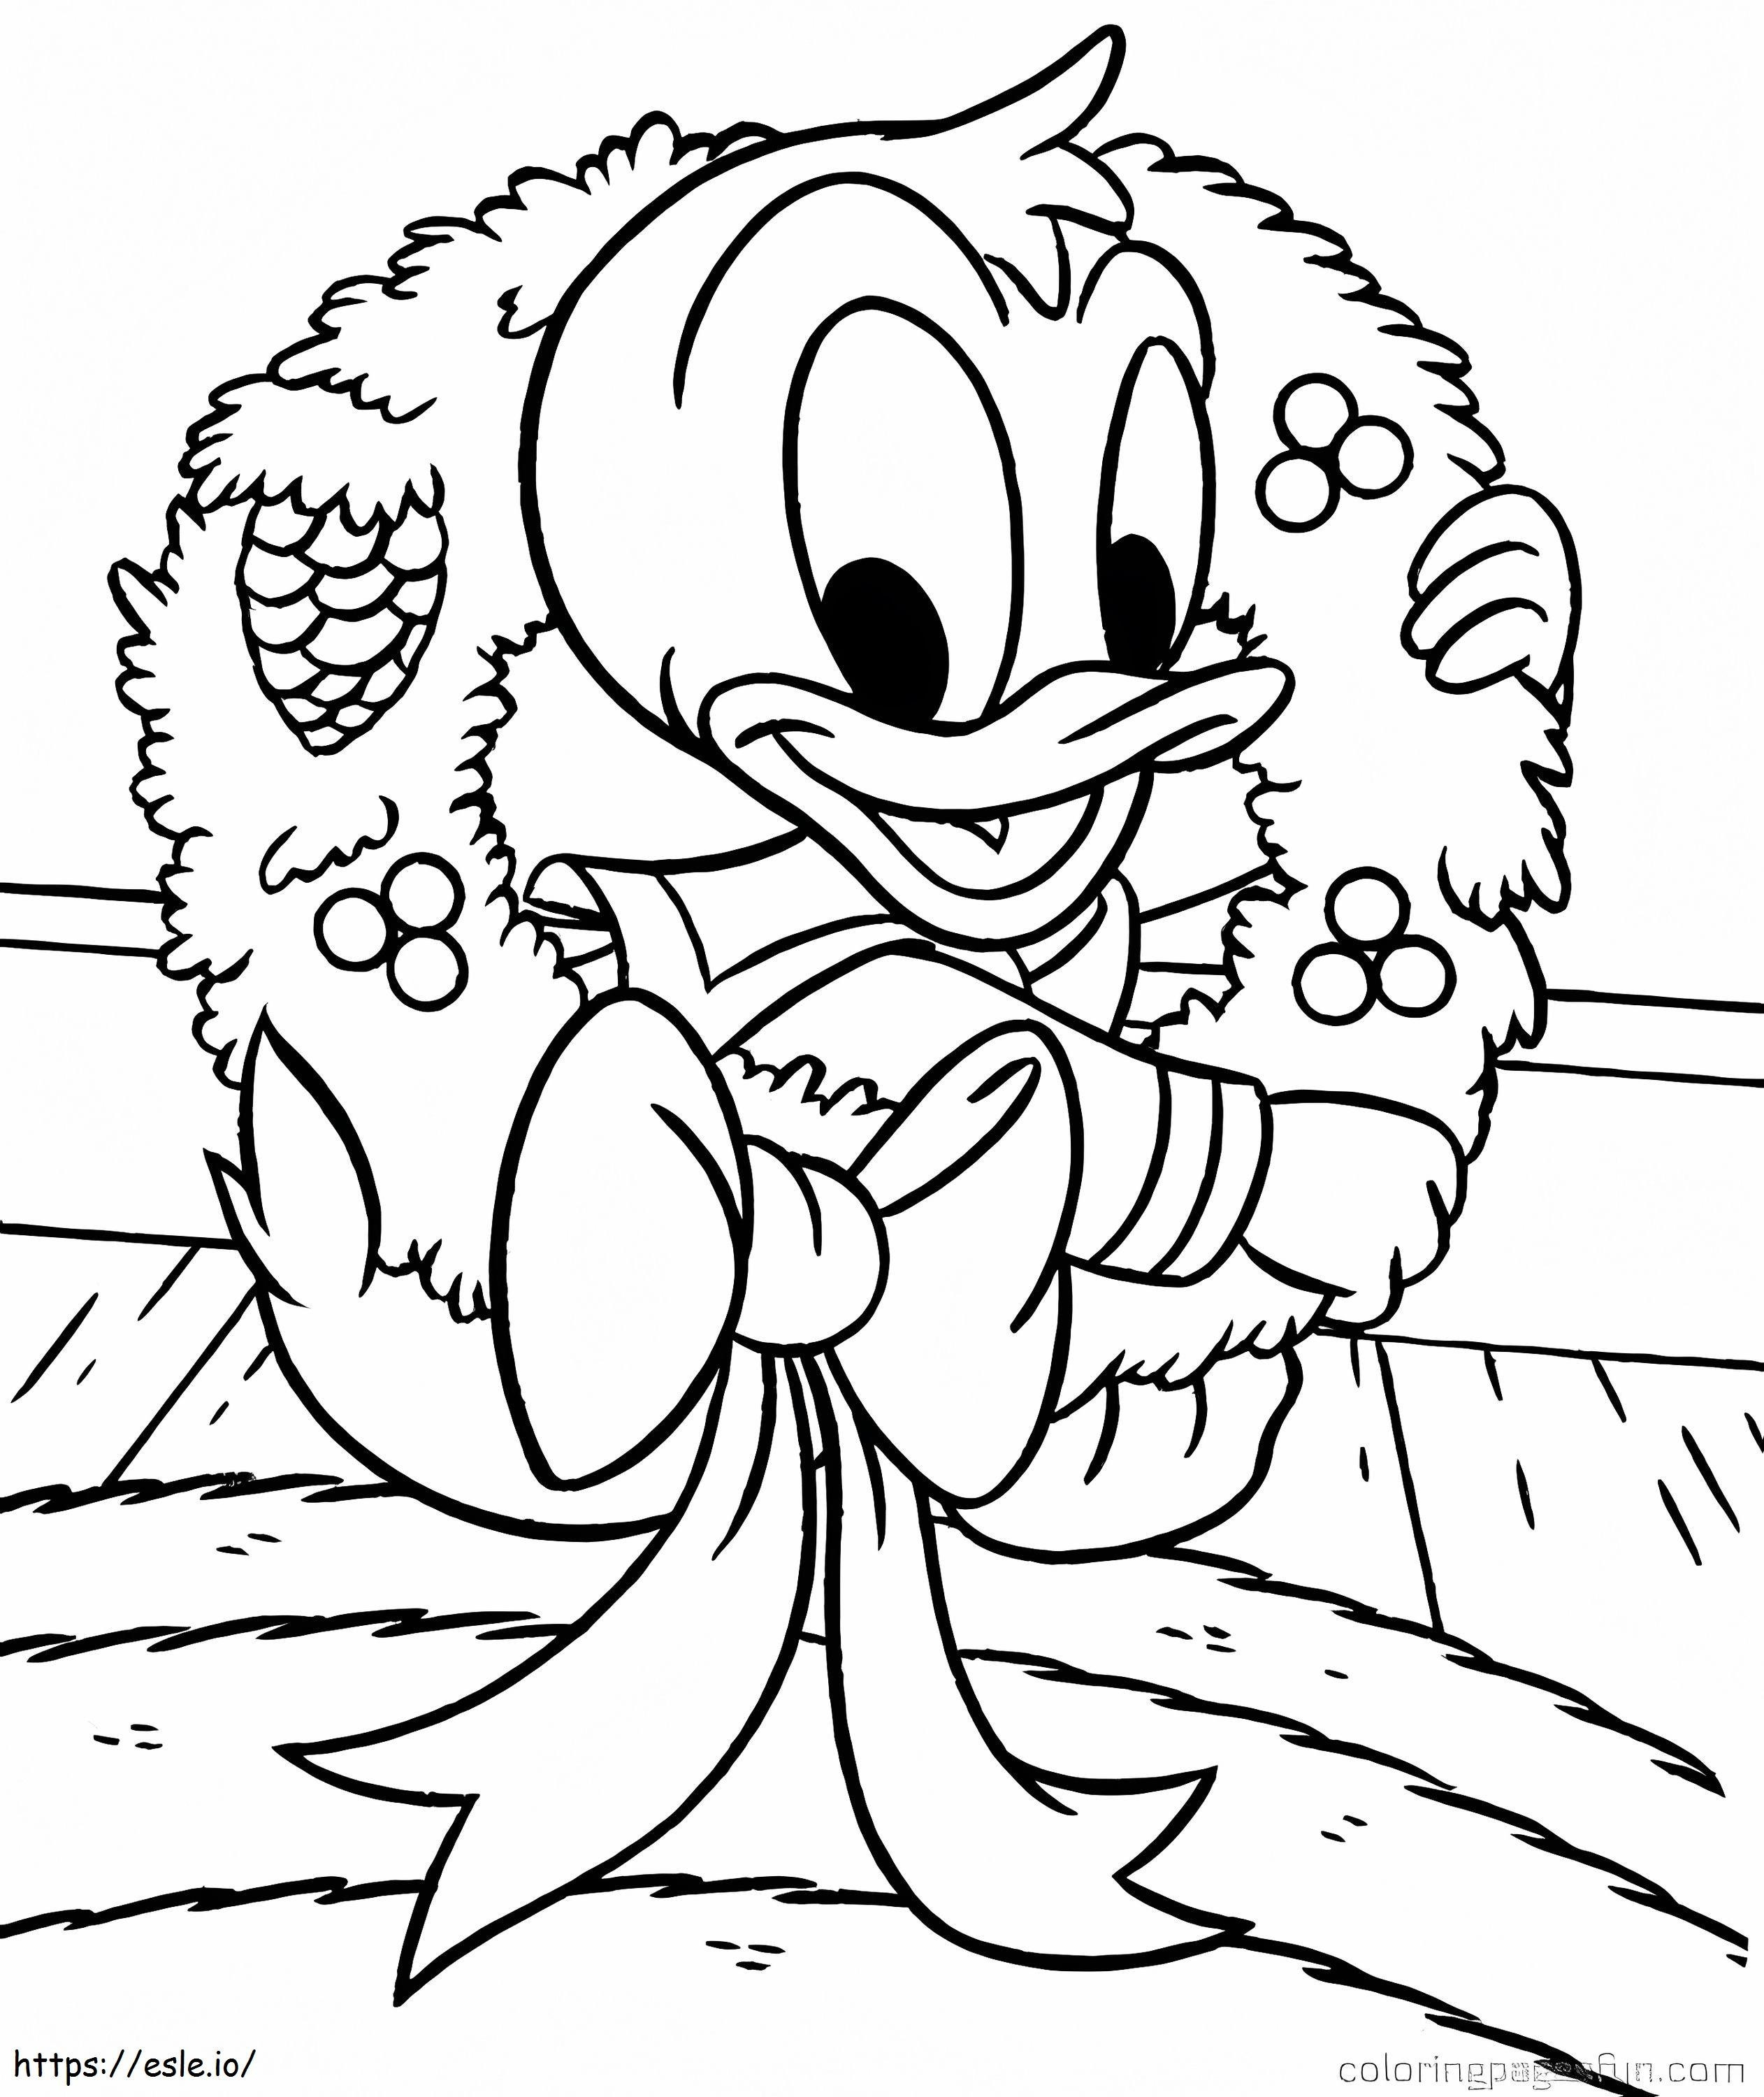 Pato Donald com guirlanda de Natal para colorir